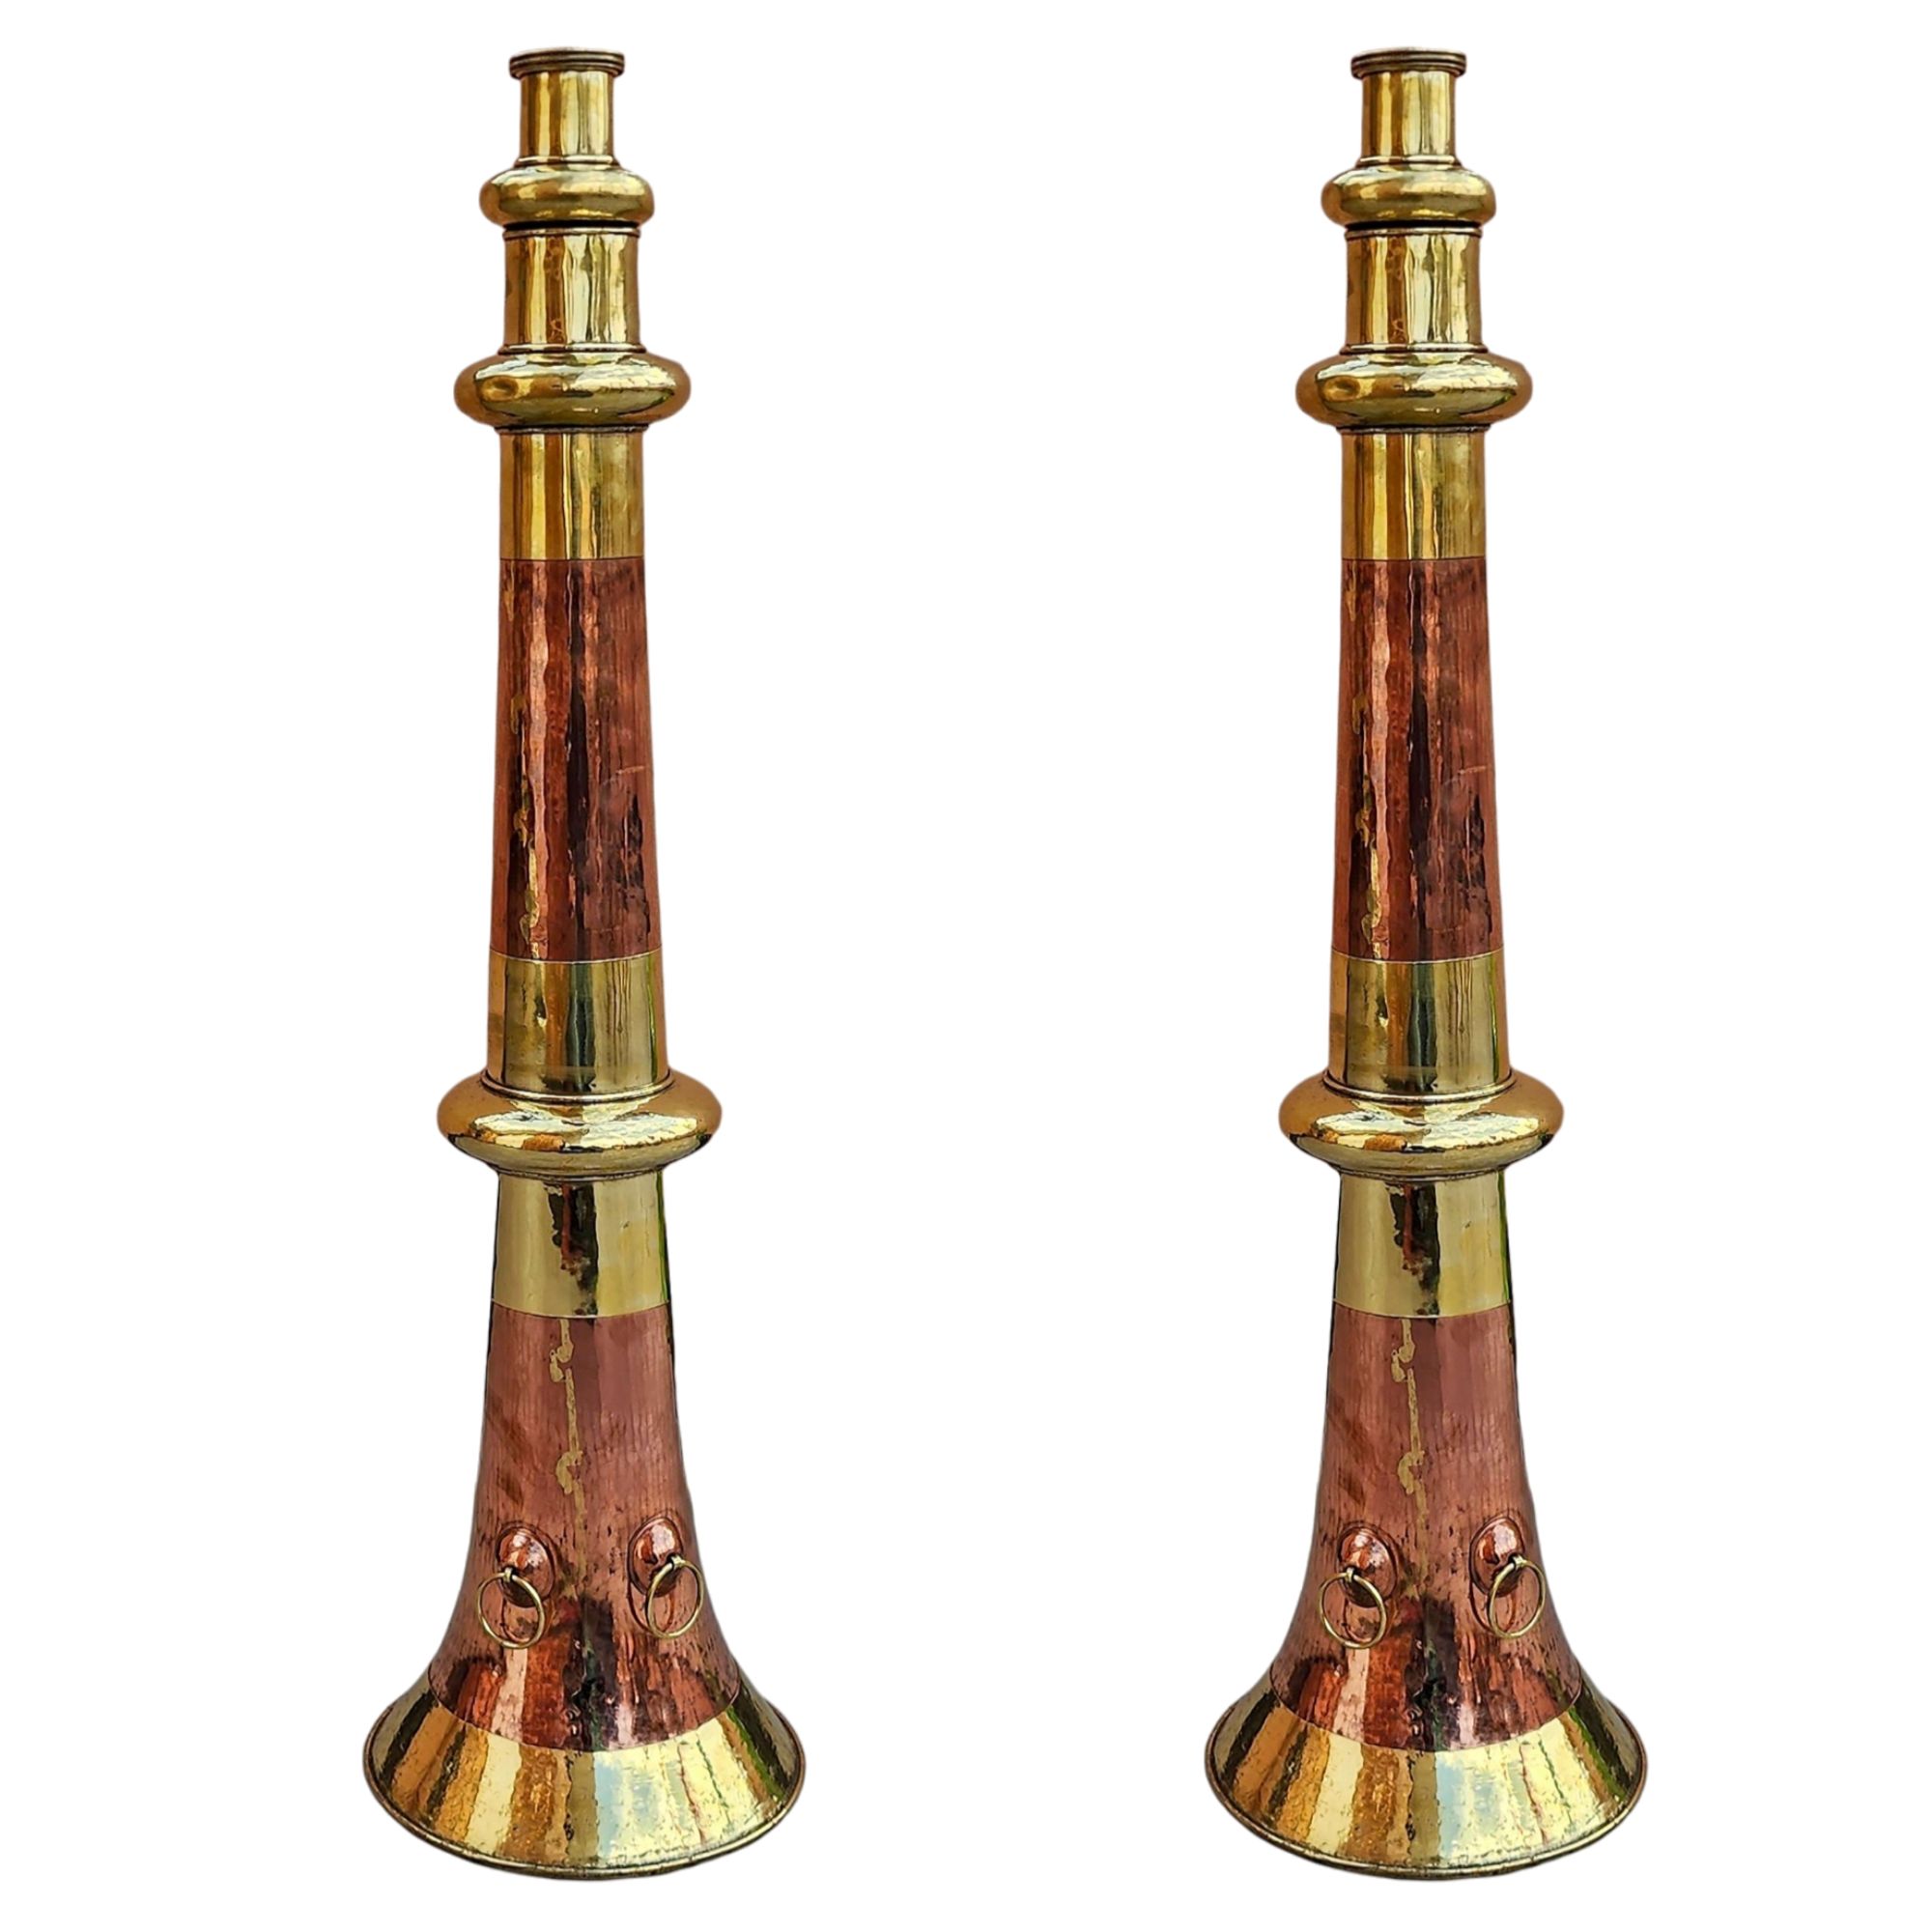 lava Trumpet, Tibetan Tradition Musical Instrument